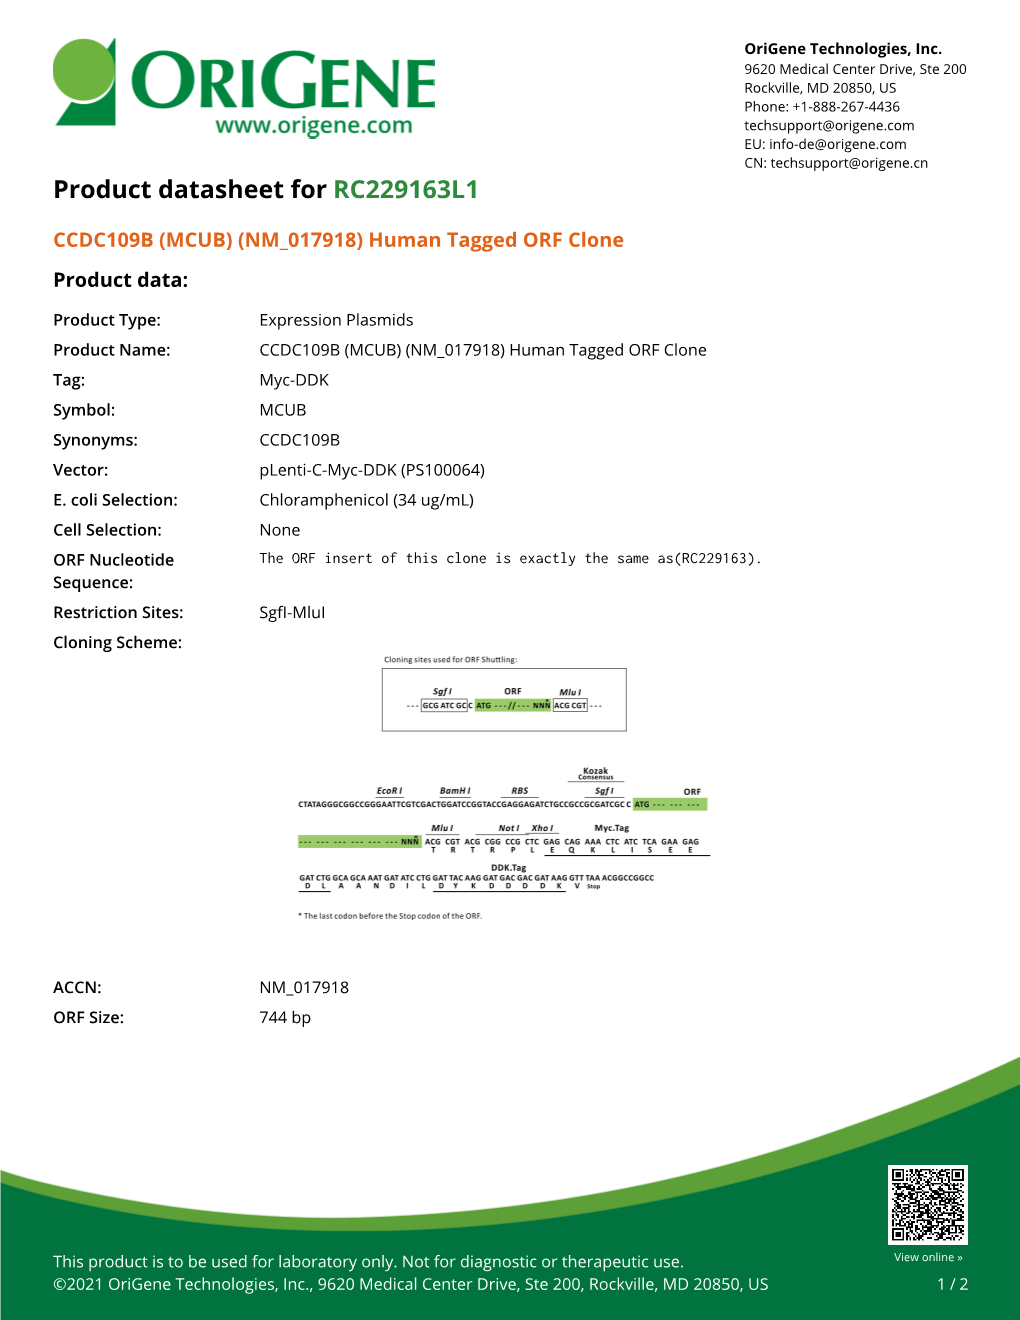 CCDC109B (MCUB) (NM 017918) Human Tagged ORF Clone Product Data